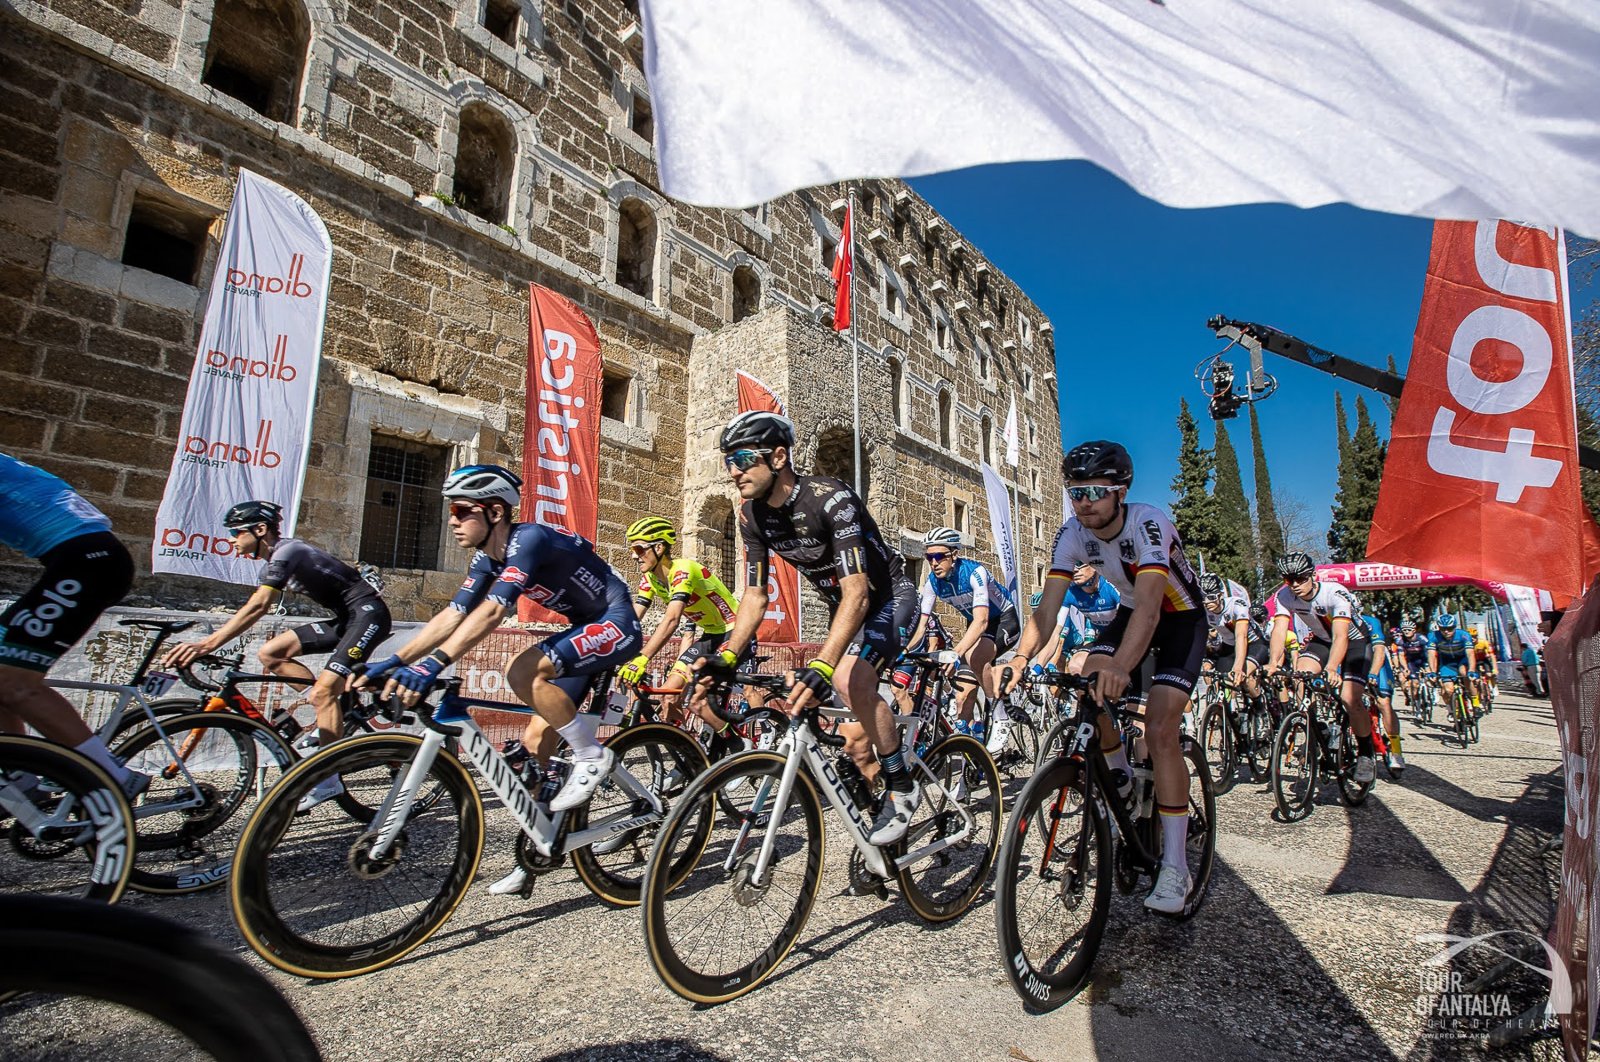 Cyclists in action during the Tour of Antalya tournament, Antalya, Türkiye. (Courtesy of Tour of Antalya)